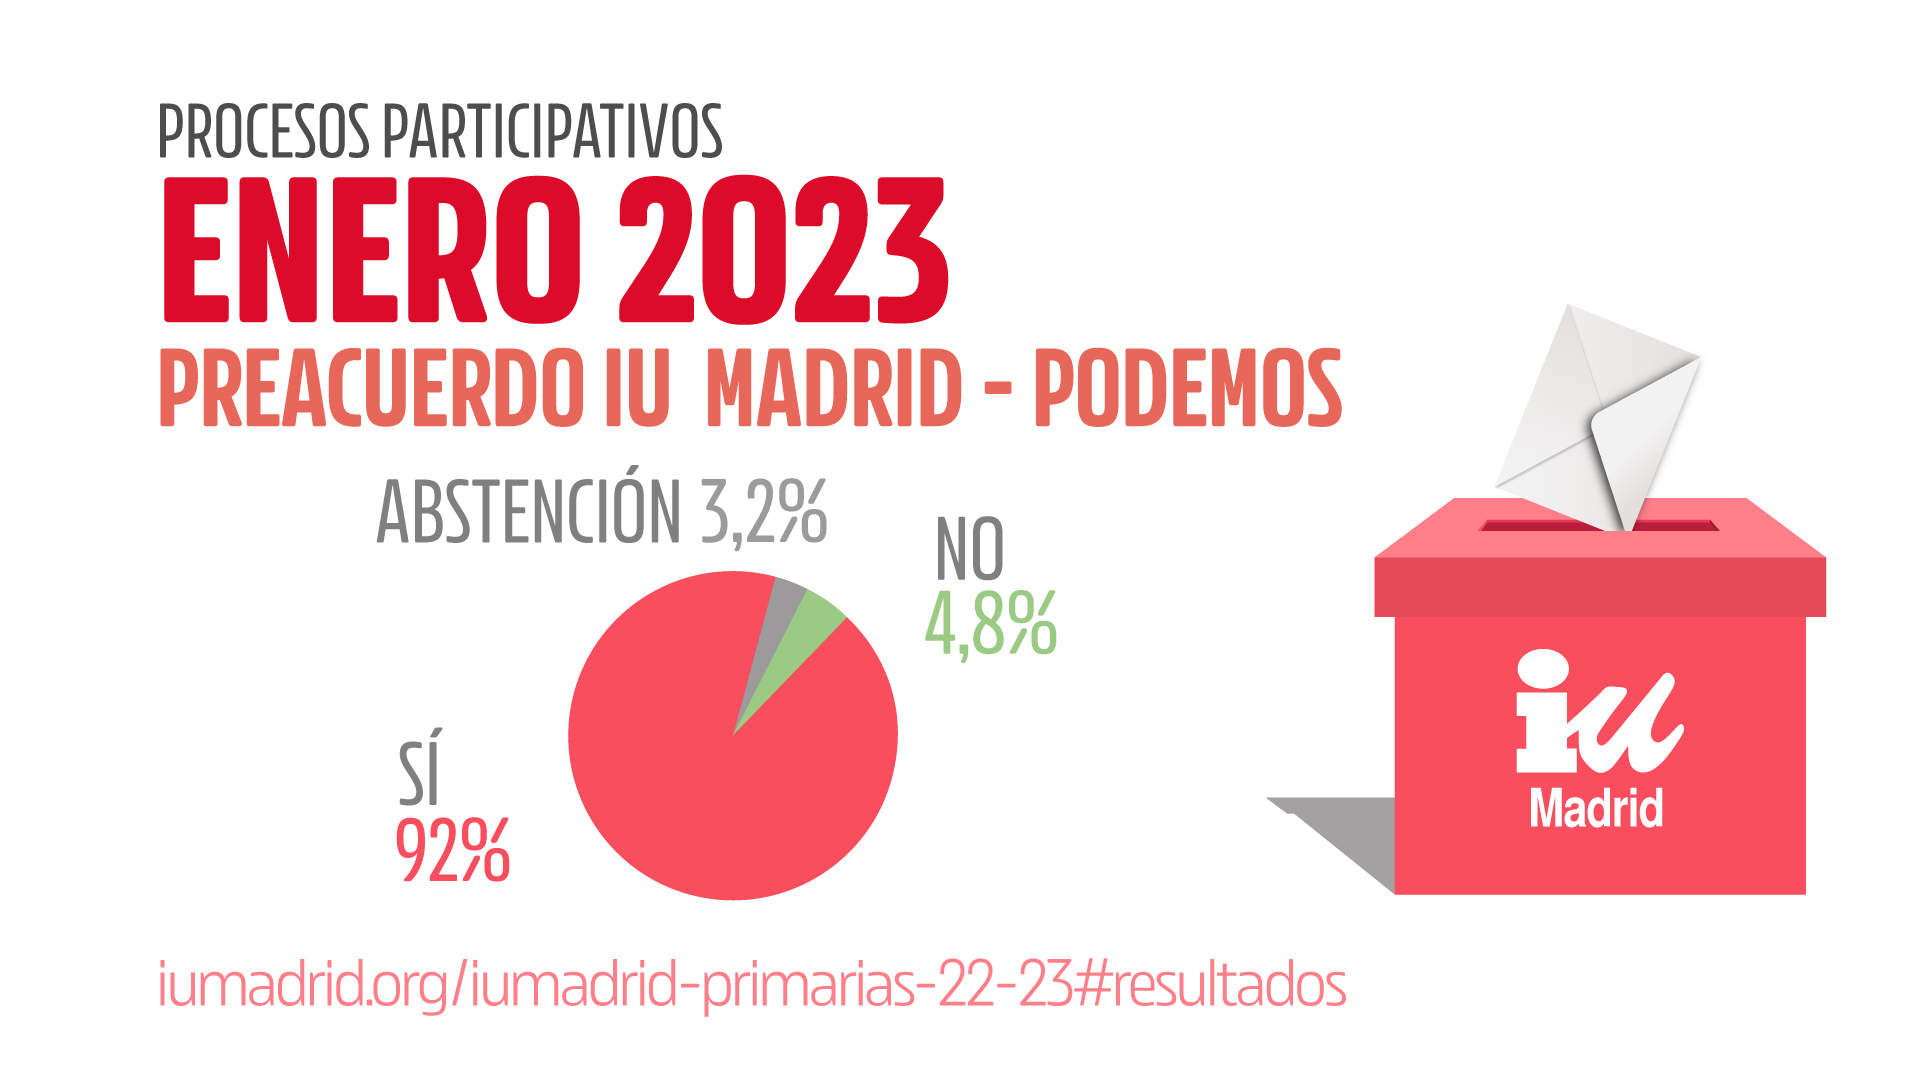 Procesos participativos IU Madrid - Resultados Preacuerdo IU Madrid - Podemos